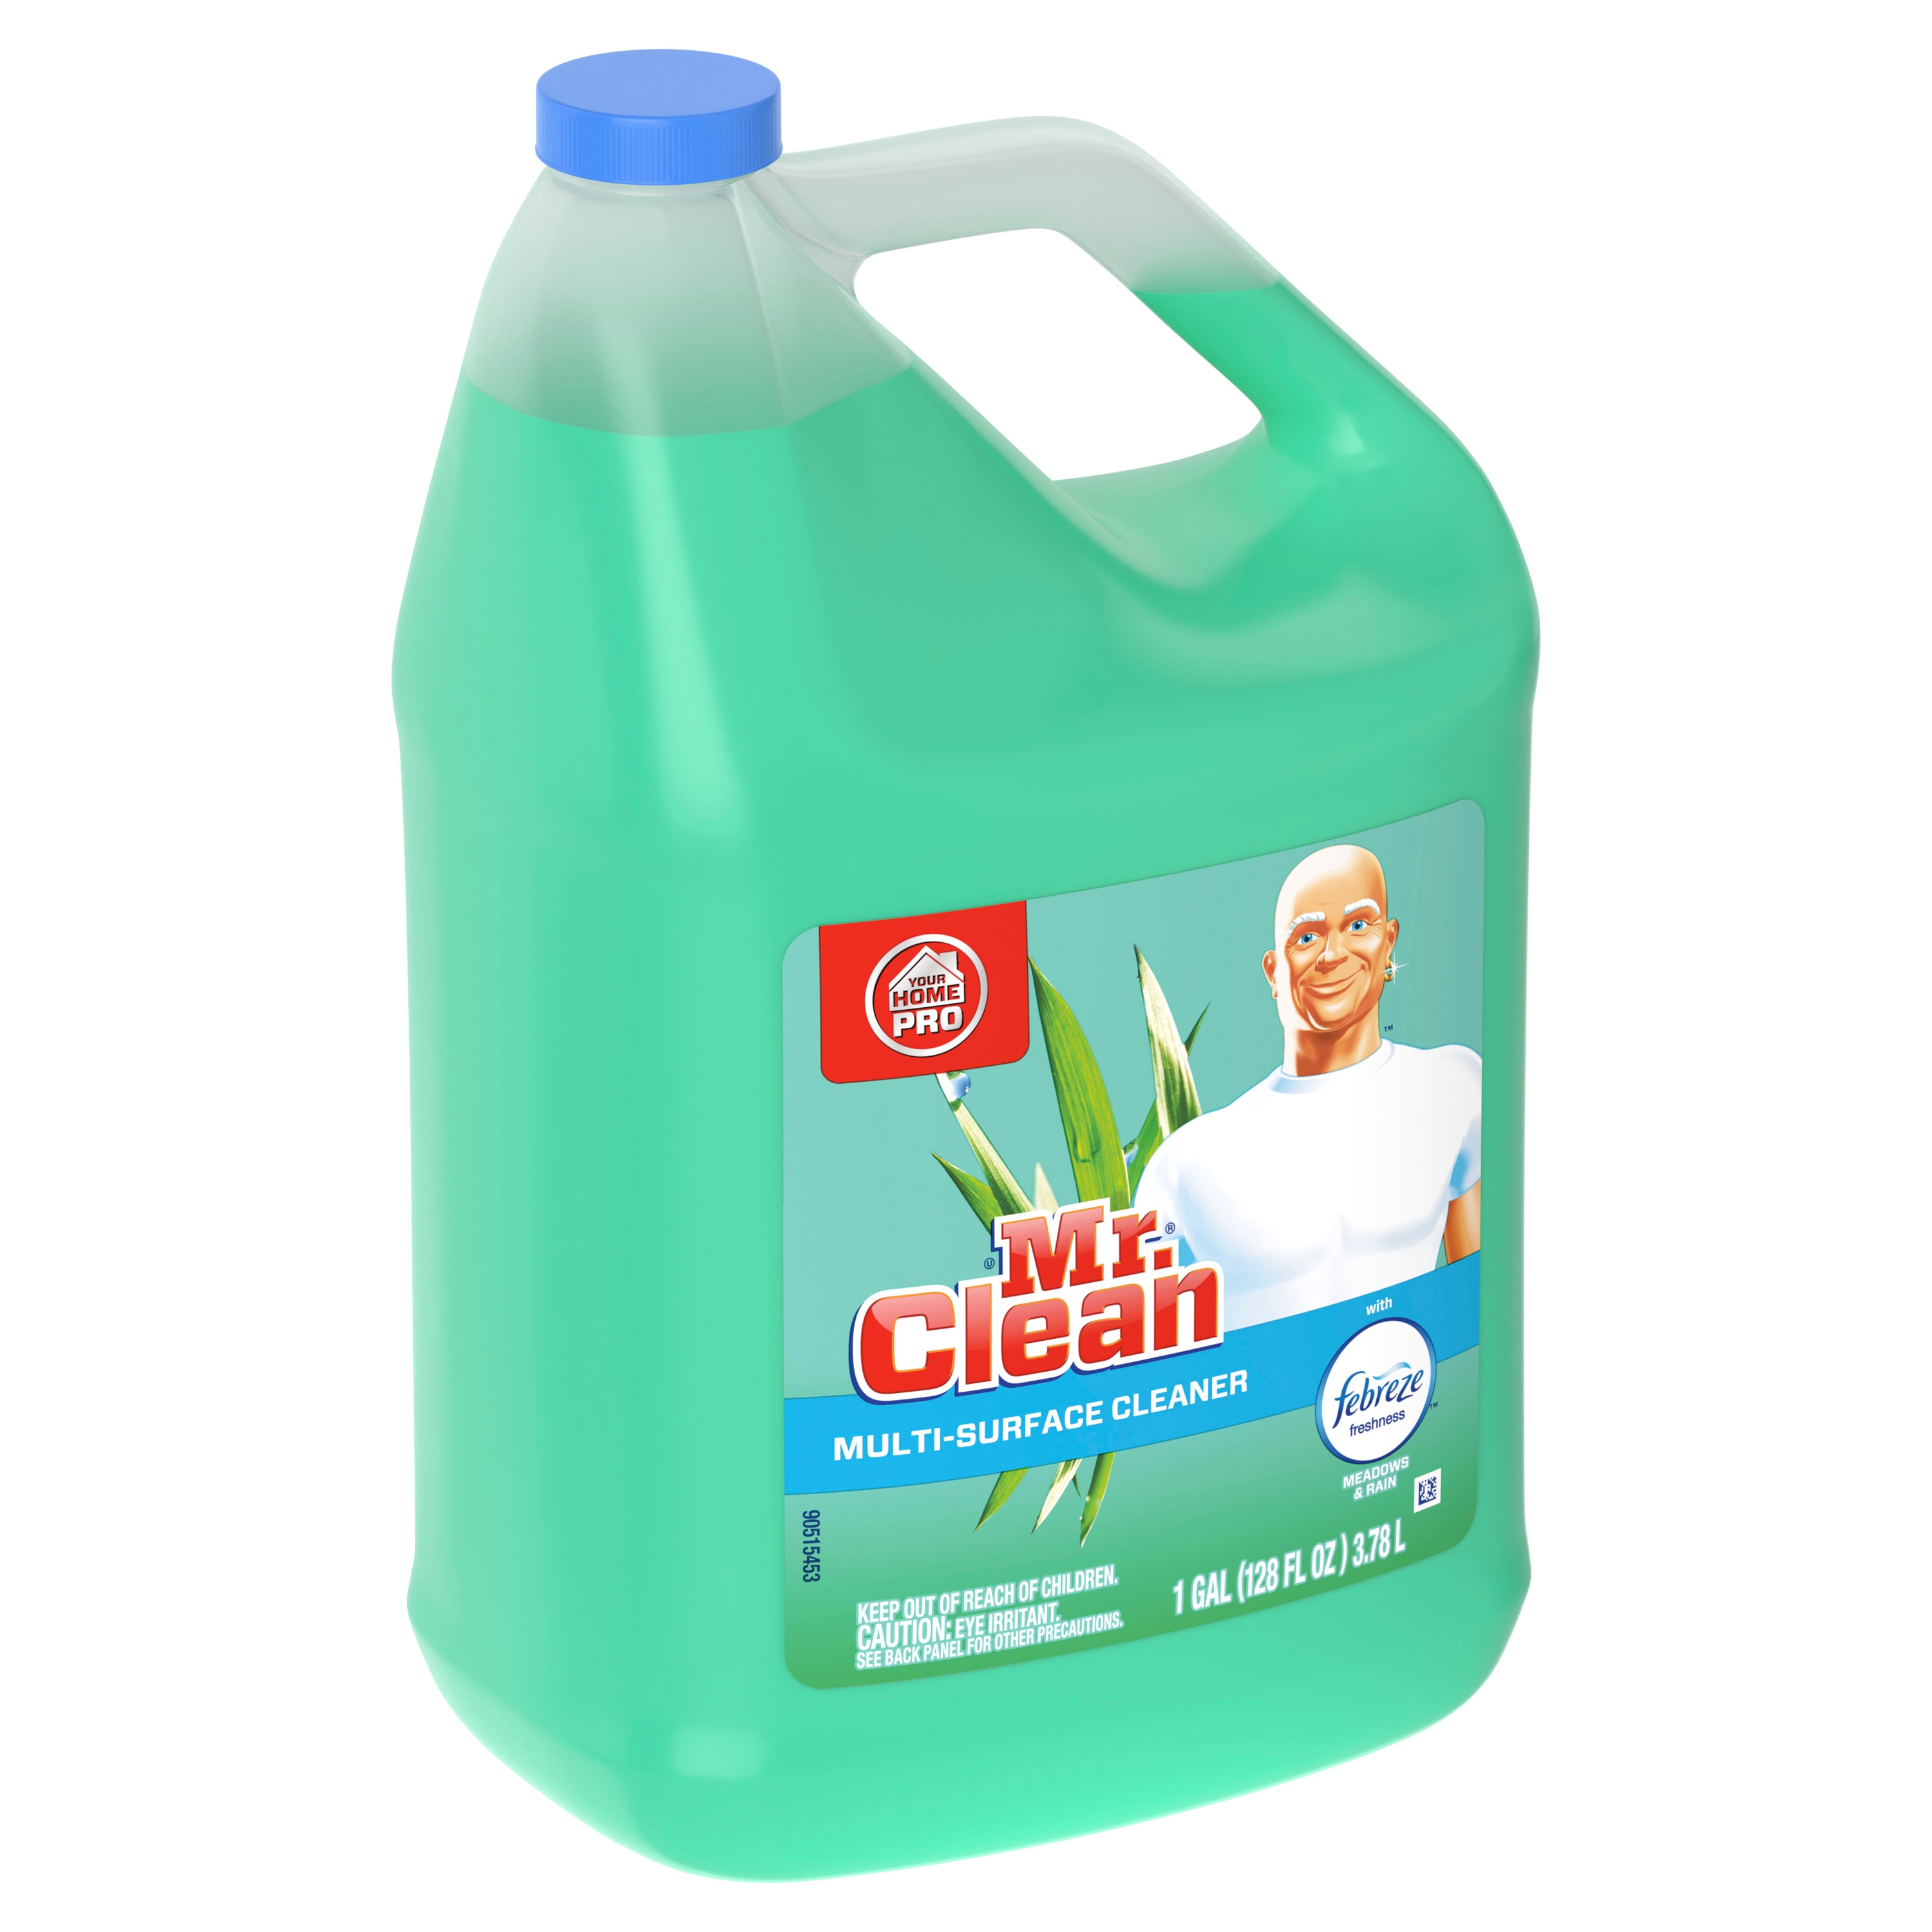 Mr. Clean Clean Freak Multi-Surface Spray Refill 16 Oz, Gain Original